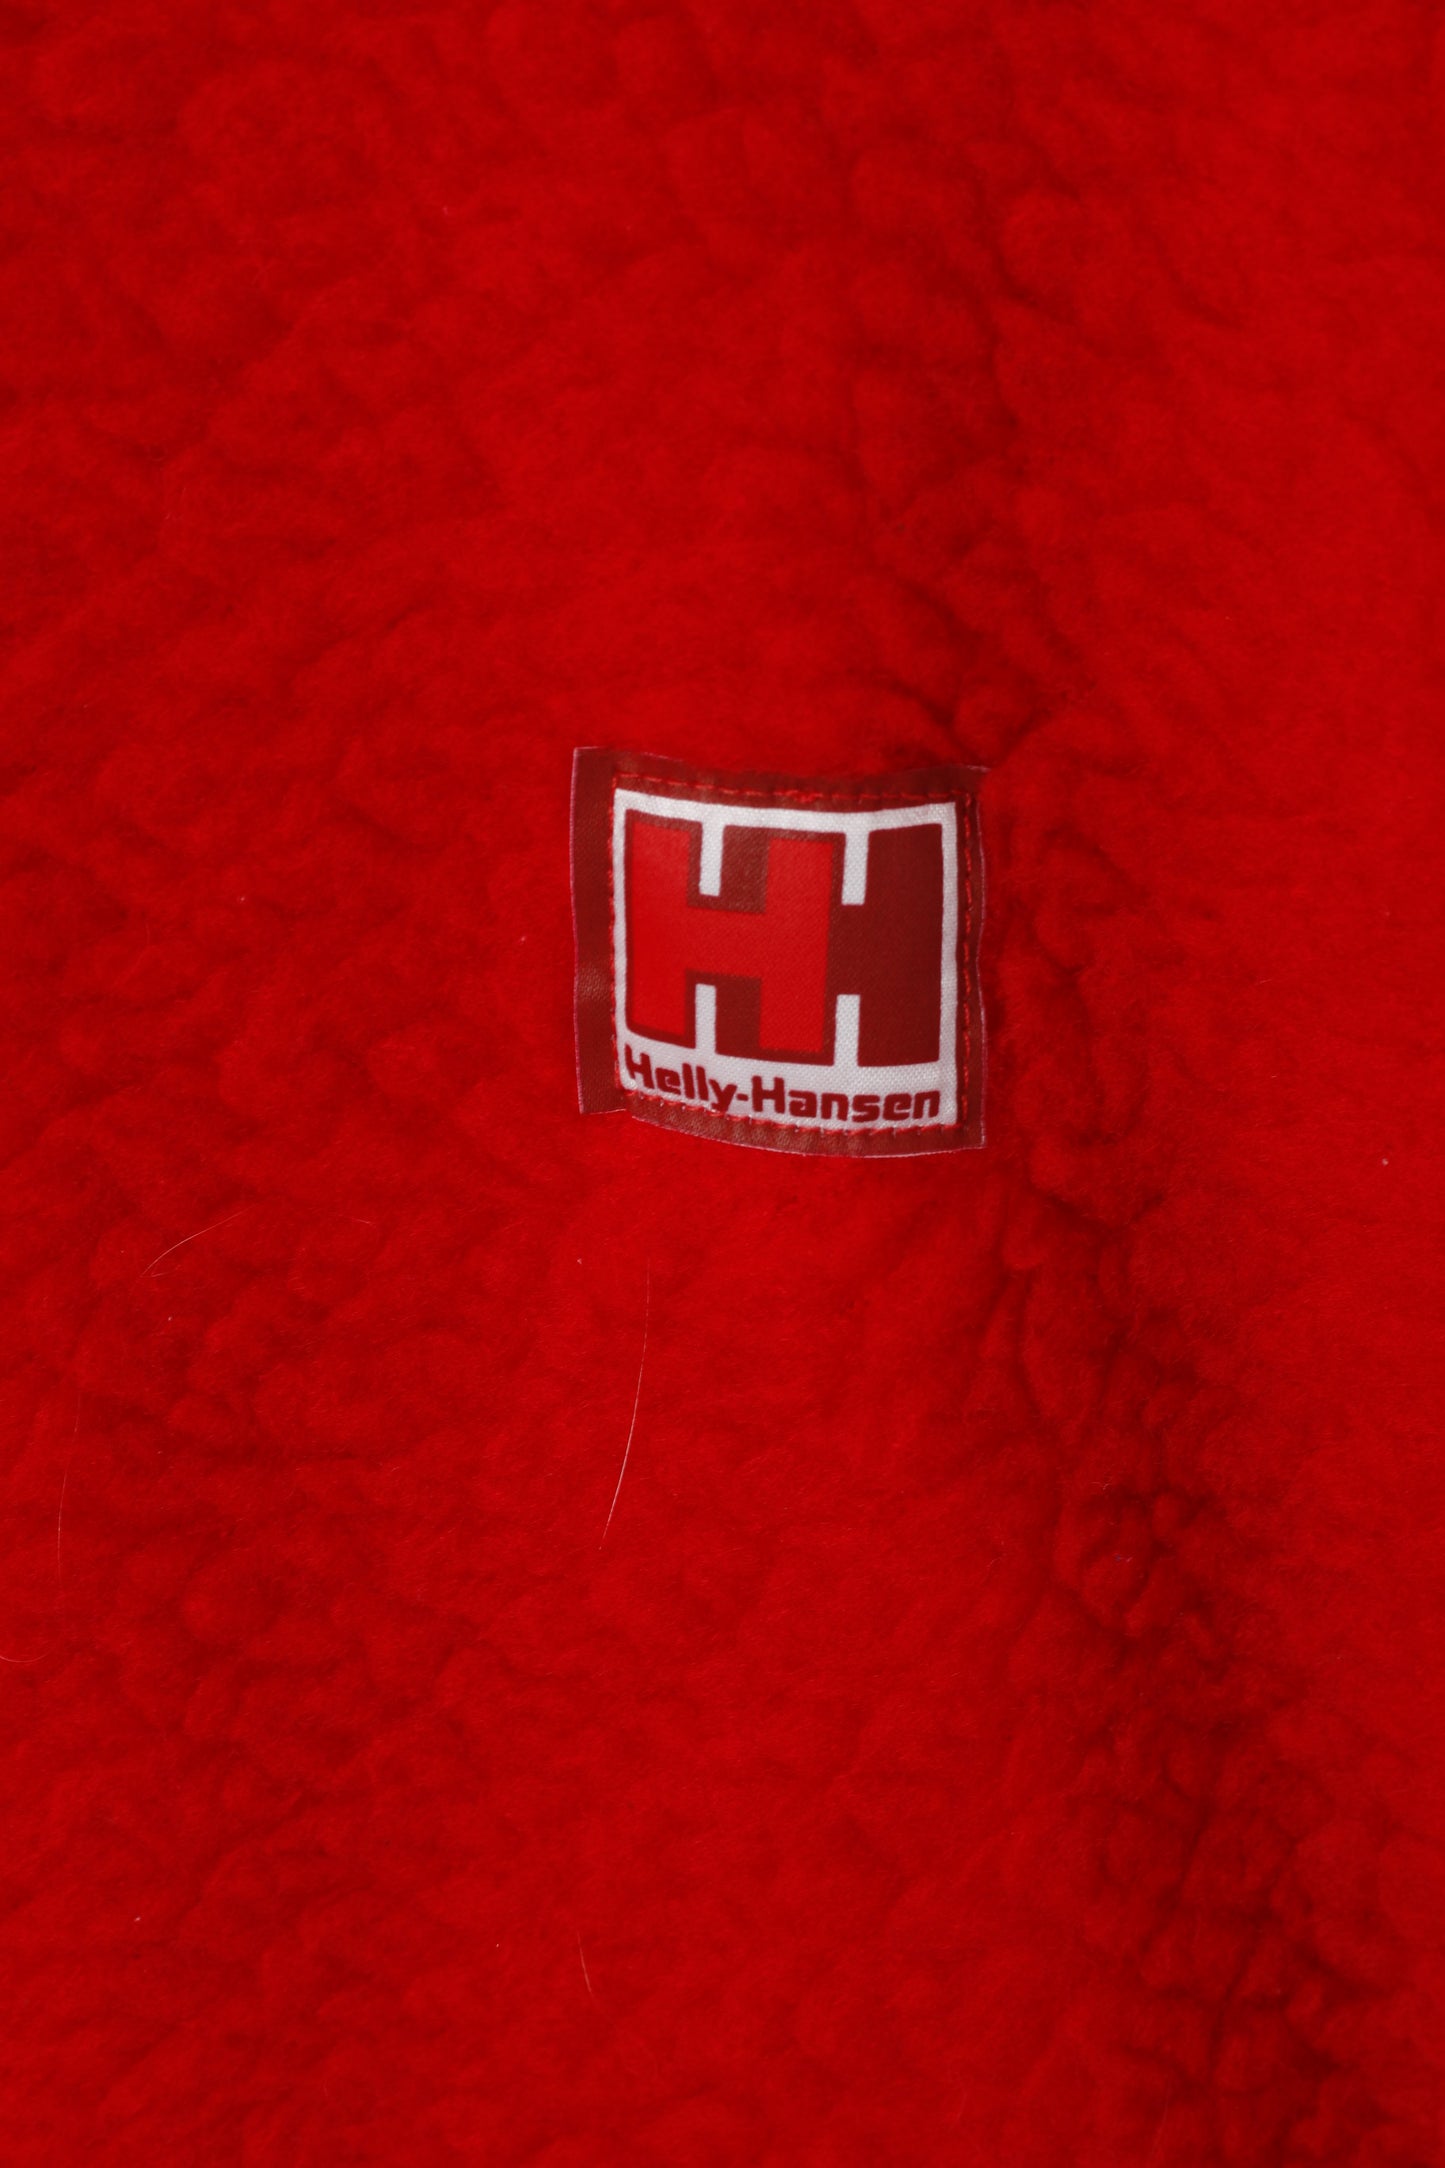 Helly Hansen Femmes L Sweatshirt Rouge vintage années 90 Pull Nylon Polaire Unisexe Top